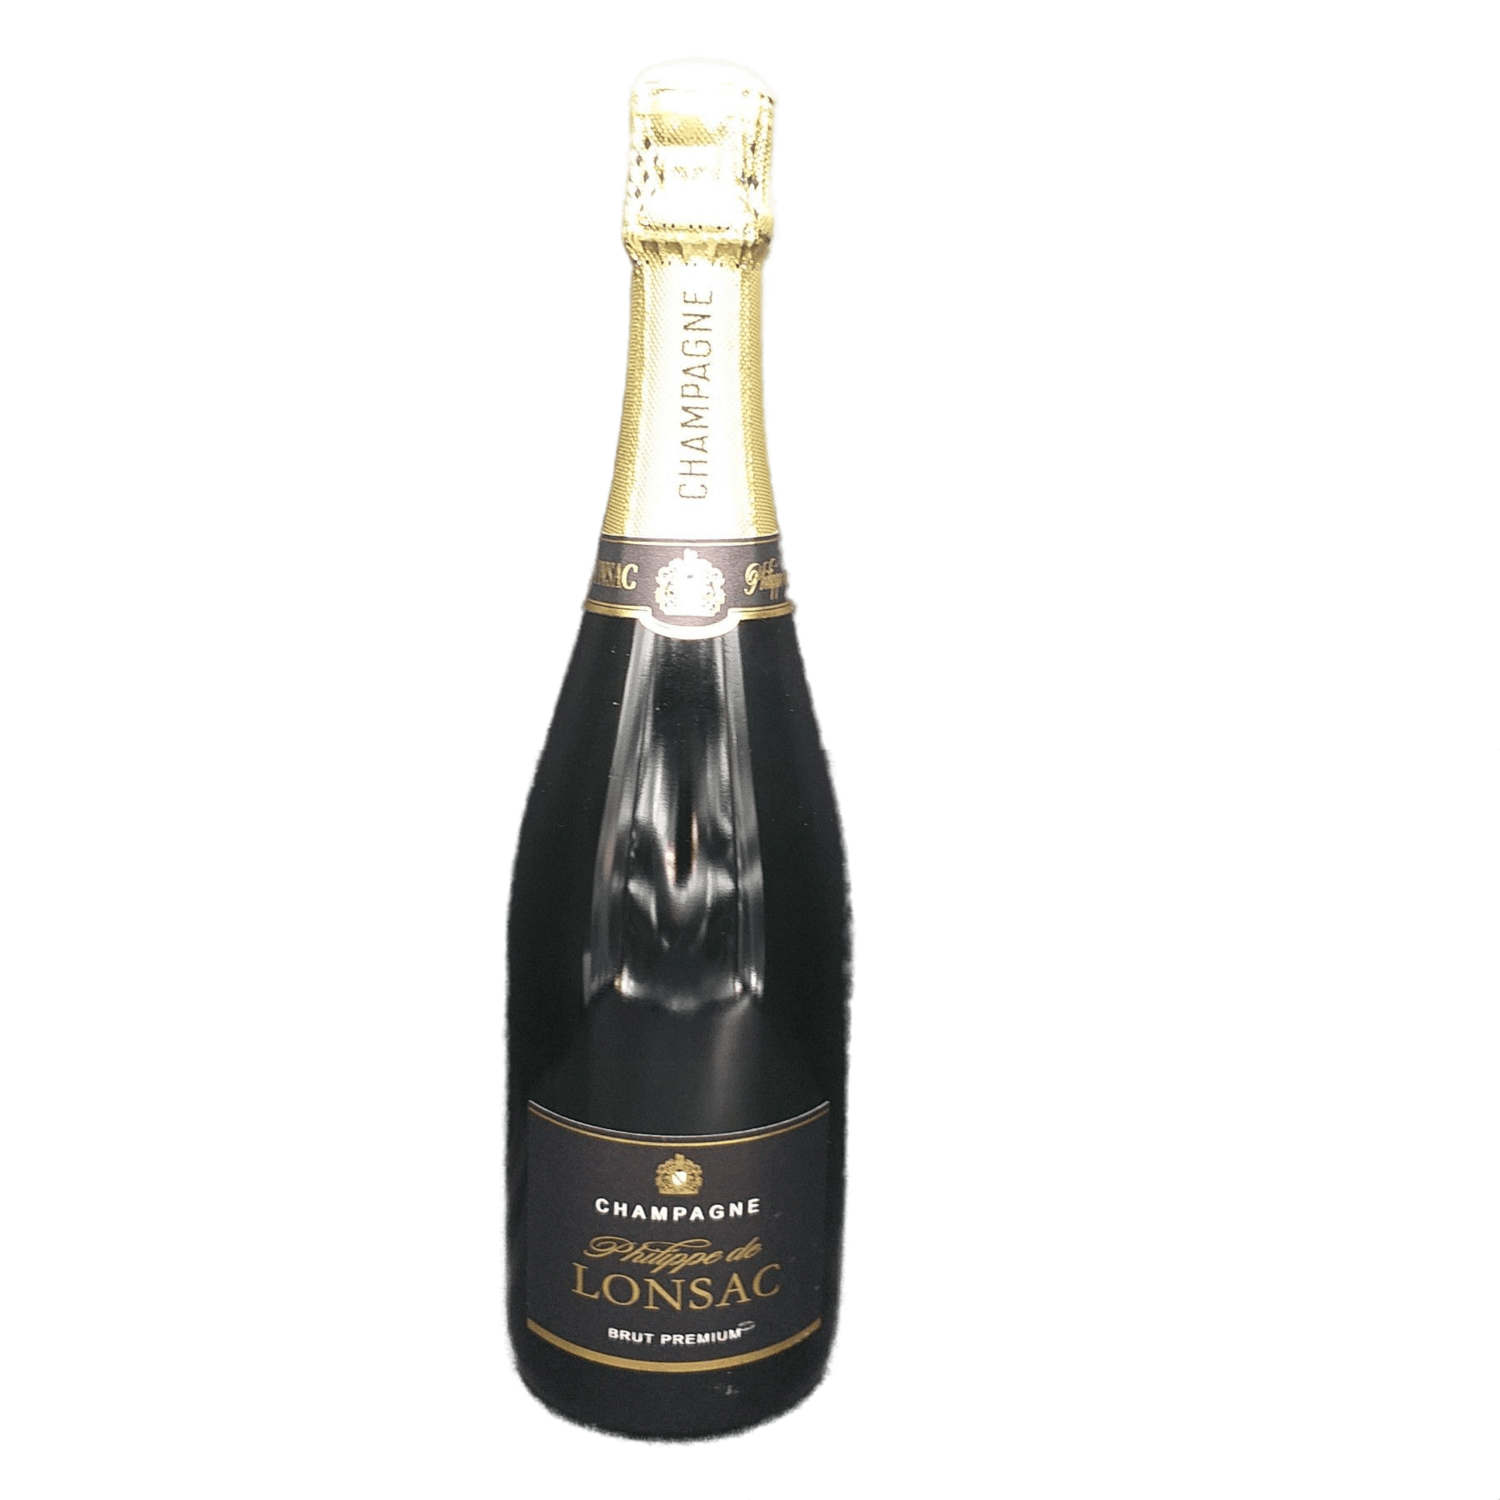 Philippe de Lonsac Brut Premium Champagner Frankreich 12% VOL. (1x0,75ltr.)